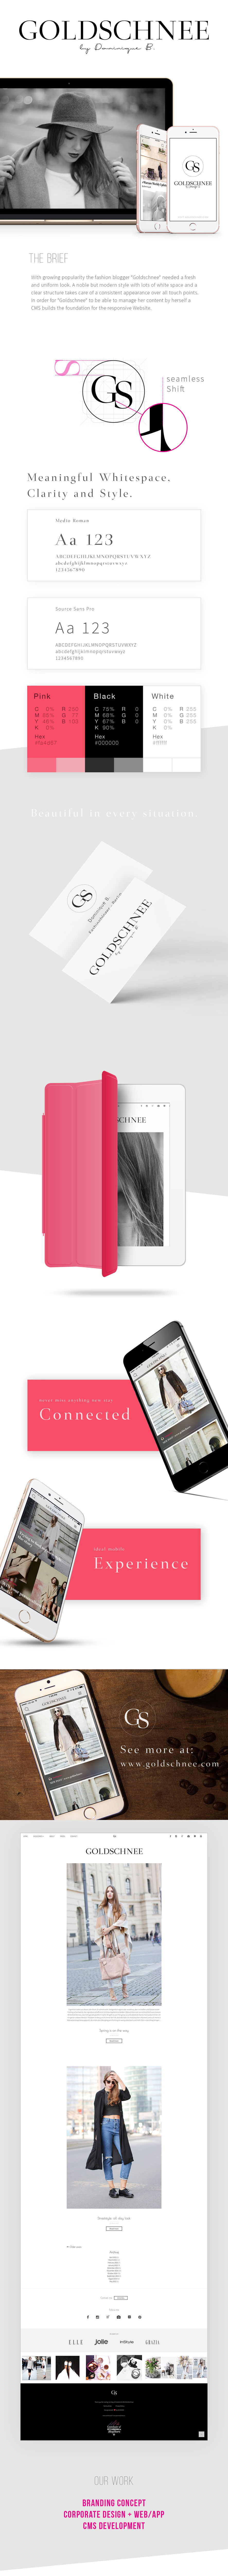 goldschnee fashionblog Website berlin germany White pink pixelpink